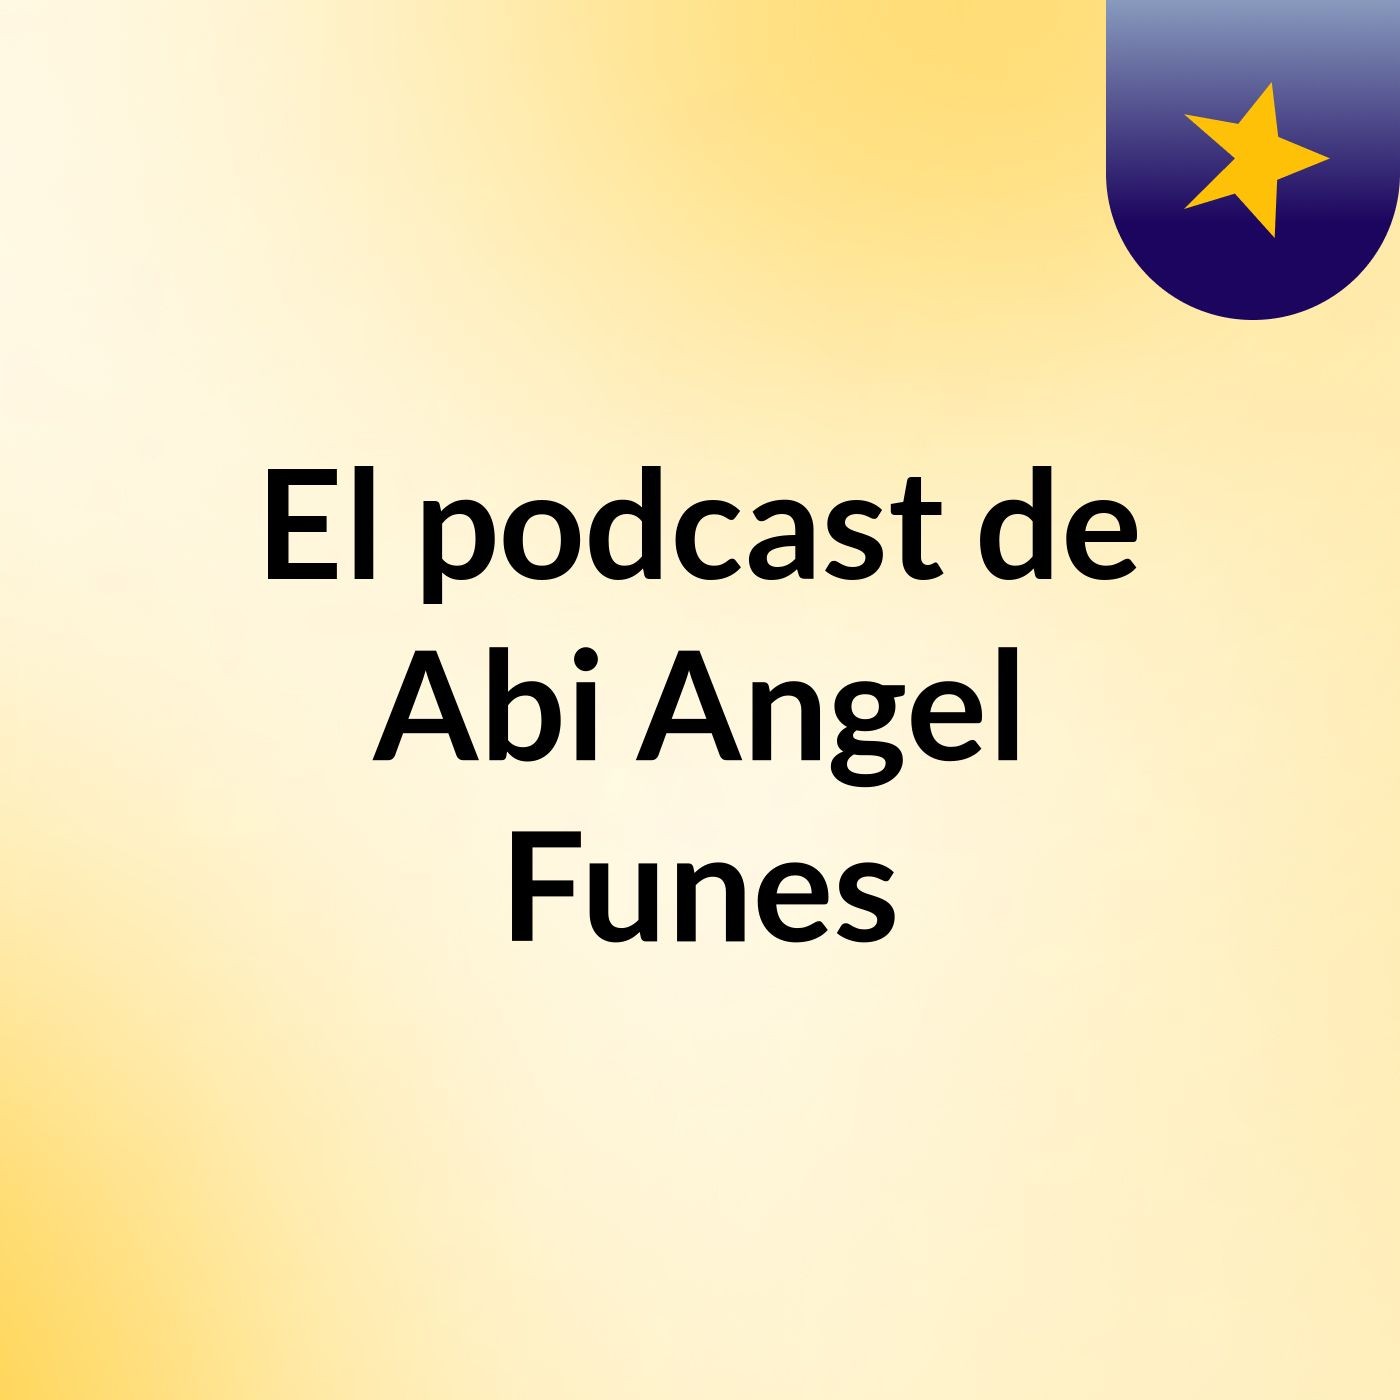 El podcast de Abi Angel Funes